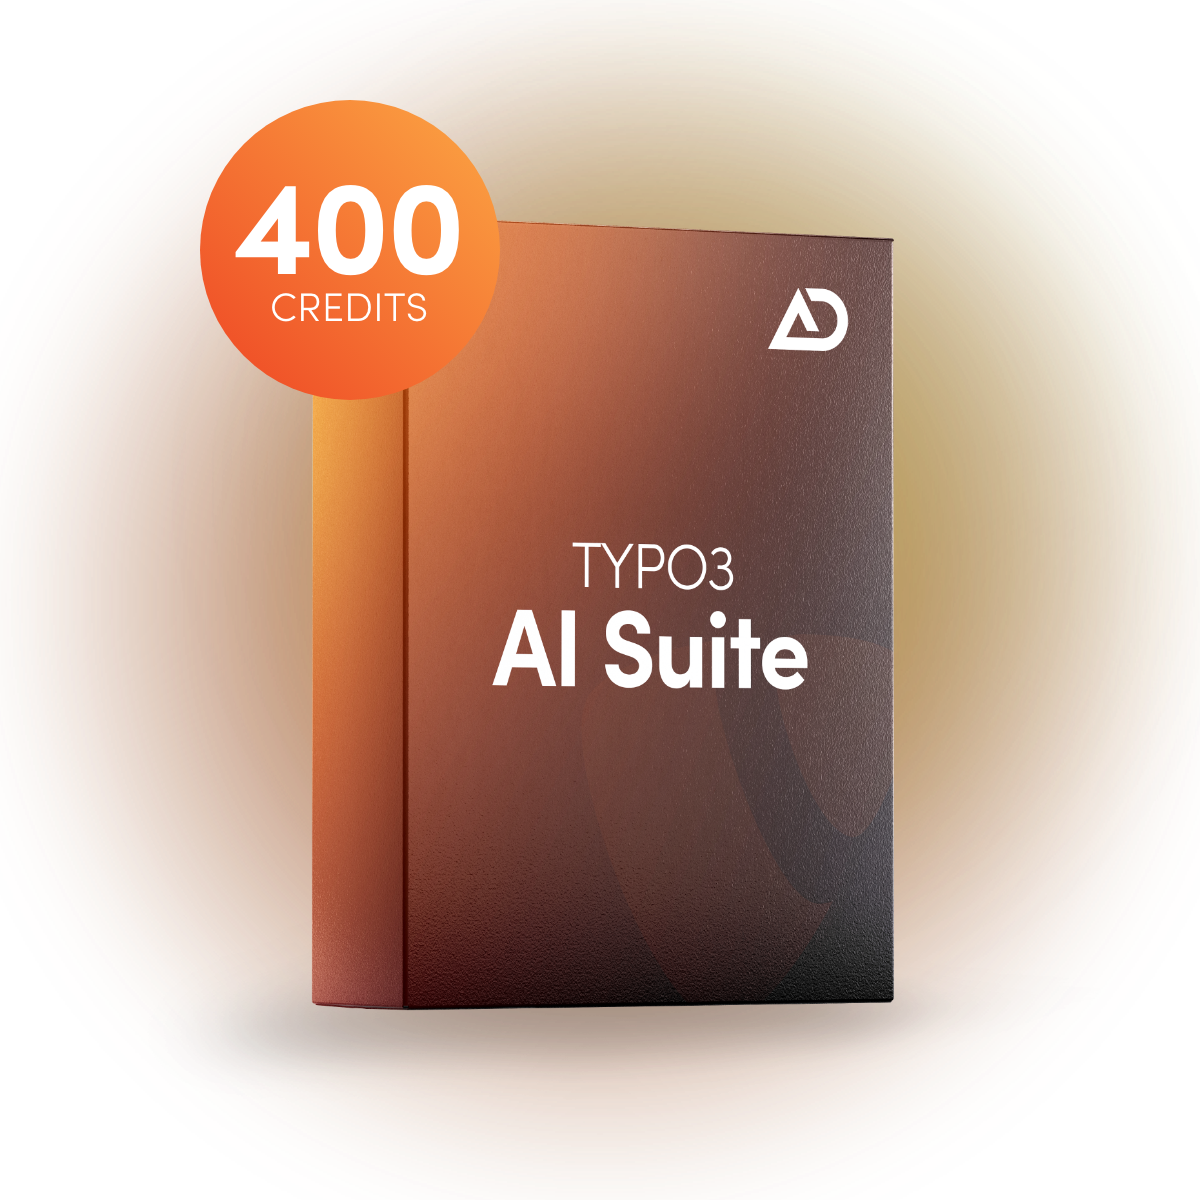 TYPO3 AI-Suite 400 Credits